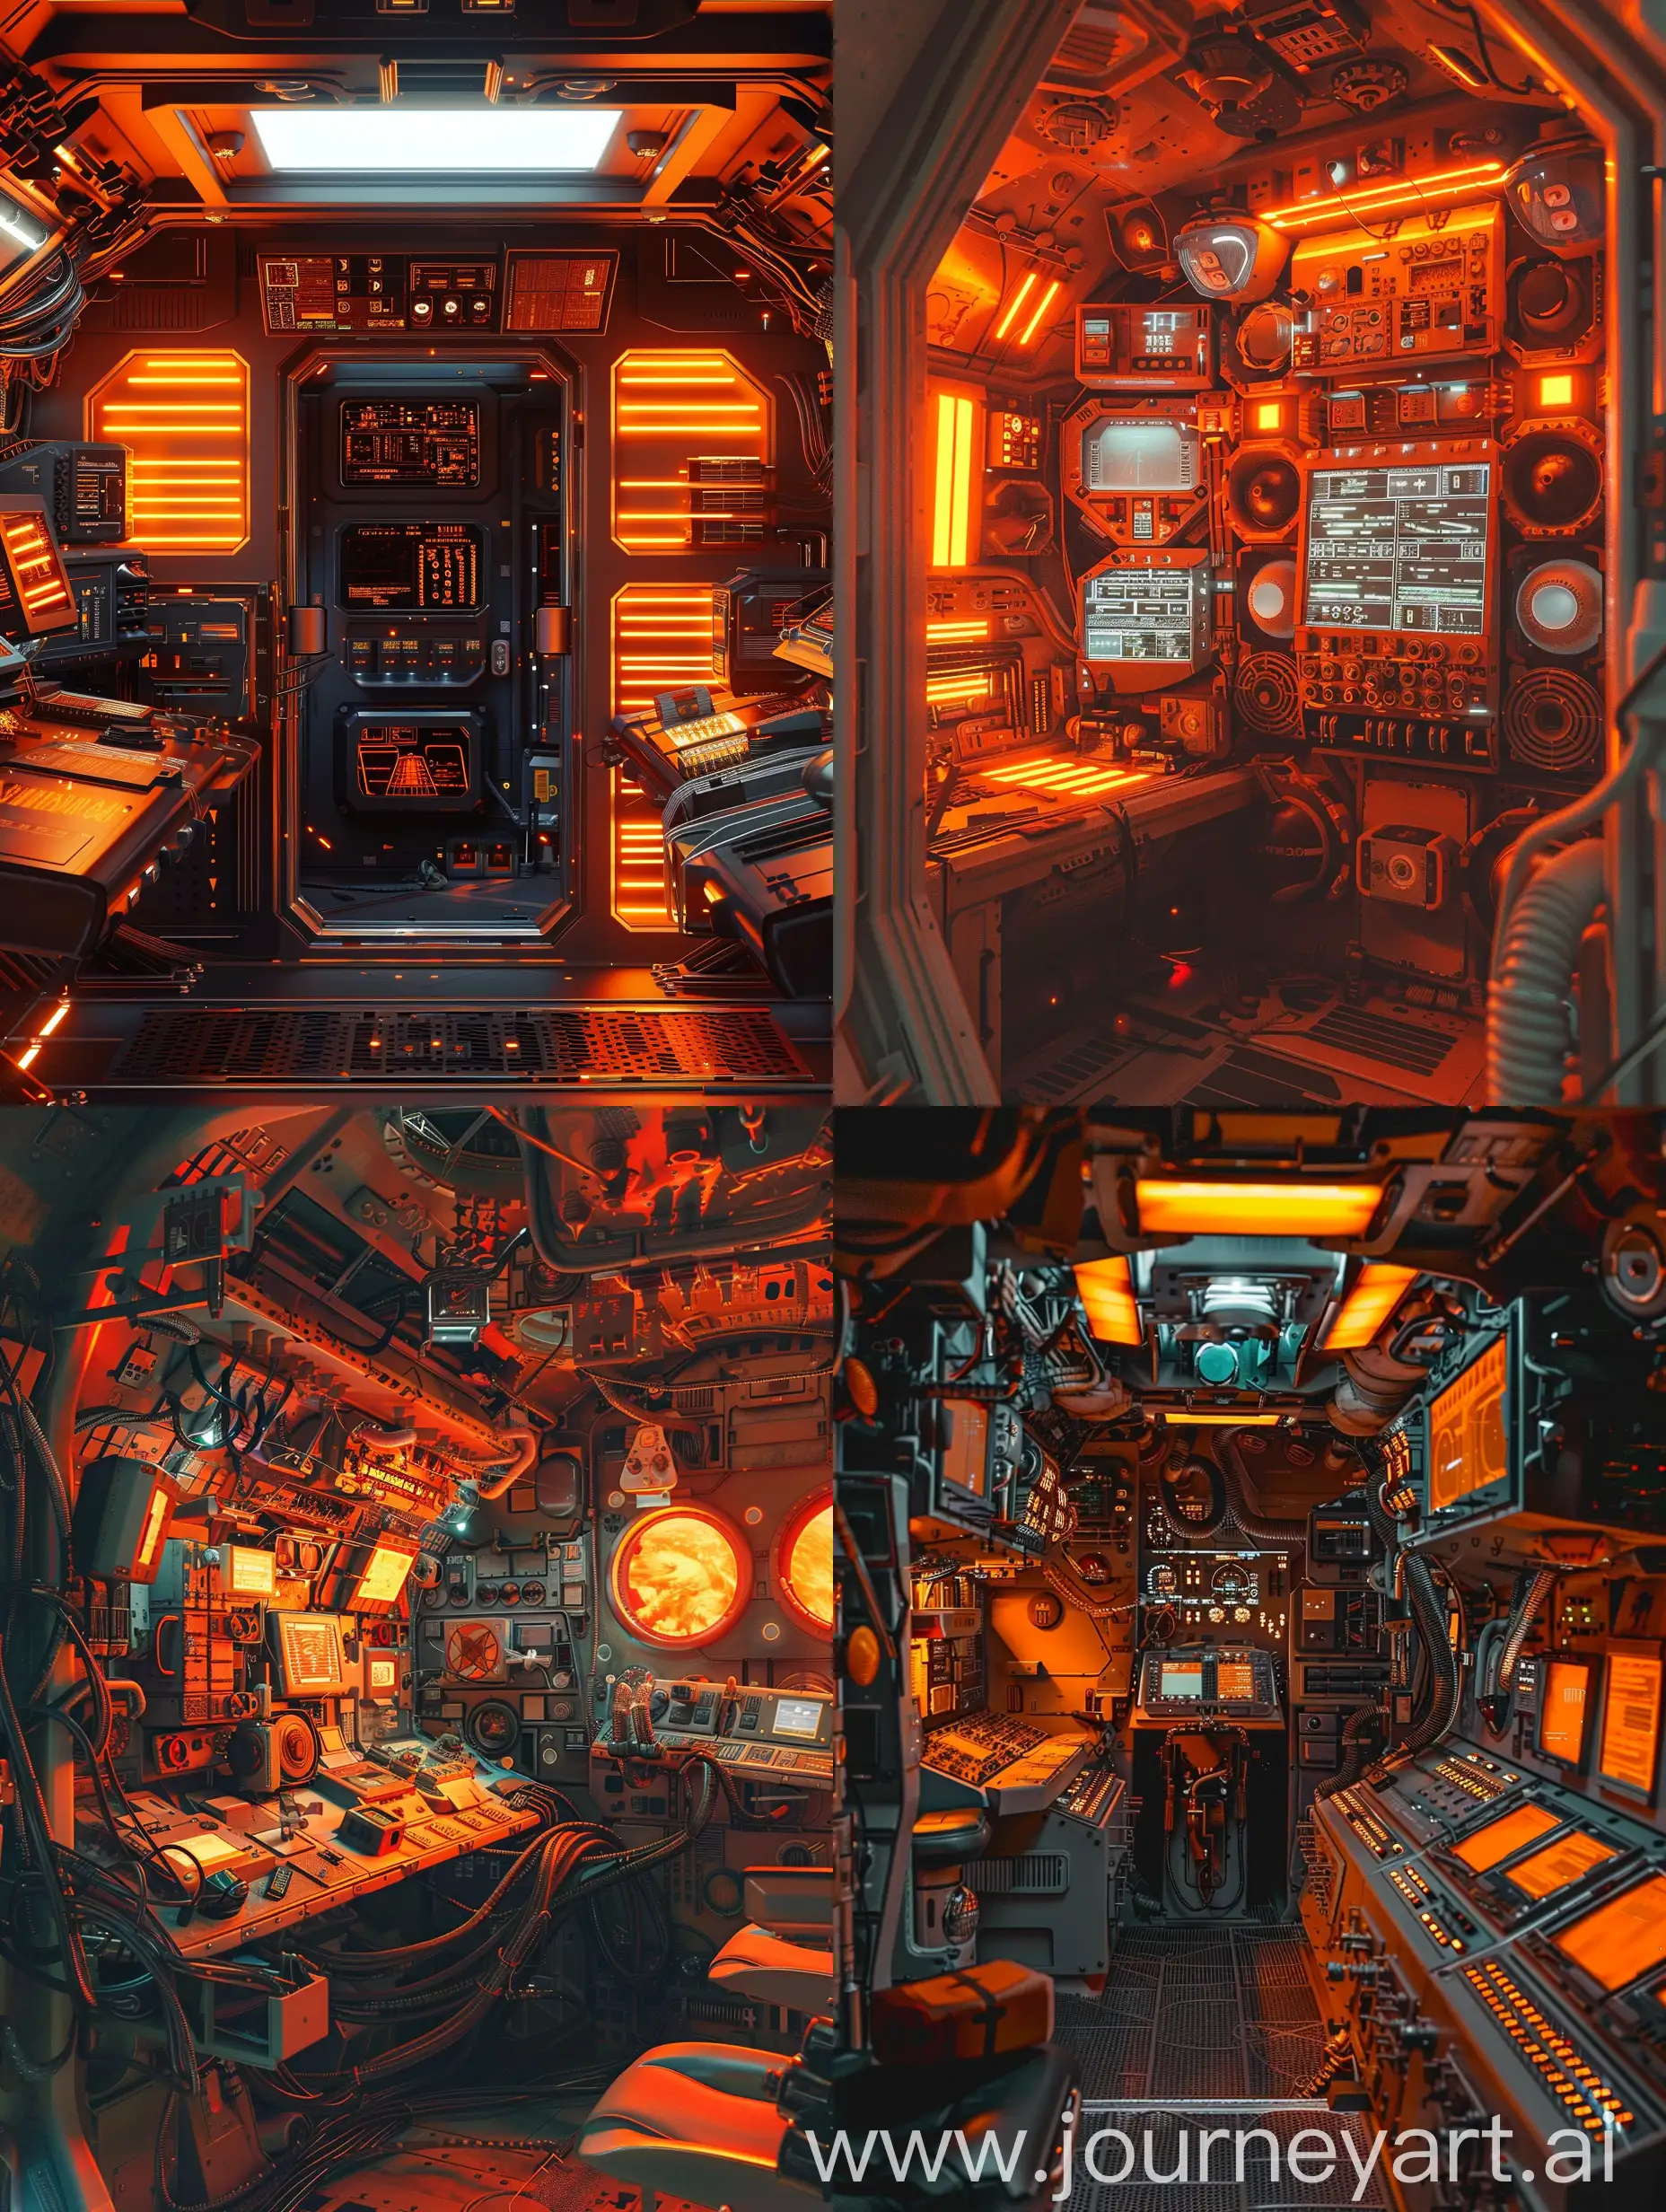 Retrofuturistic-Spaceship-Cabin-with-Vibrant-Orange-Lighting-and-Complex-Machinery